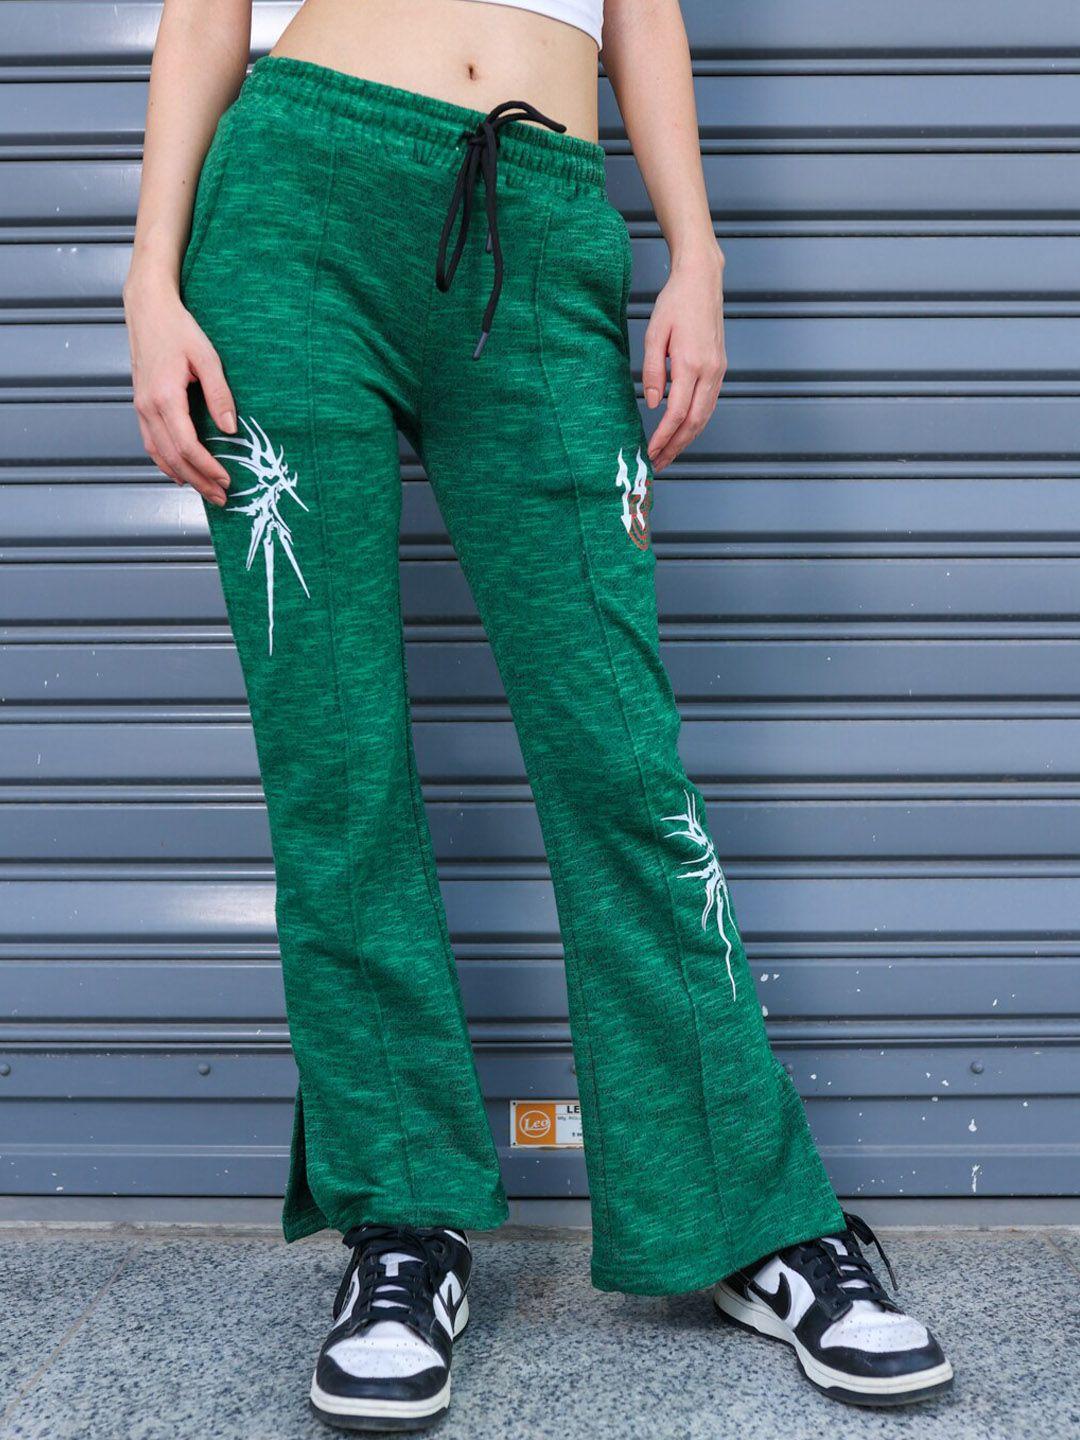 stylecast x hersheinbox women green trousers